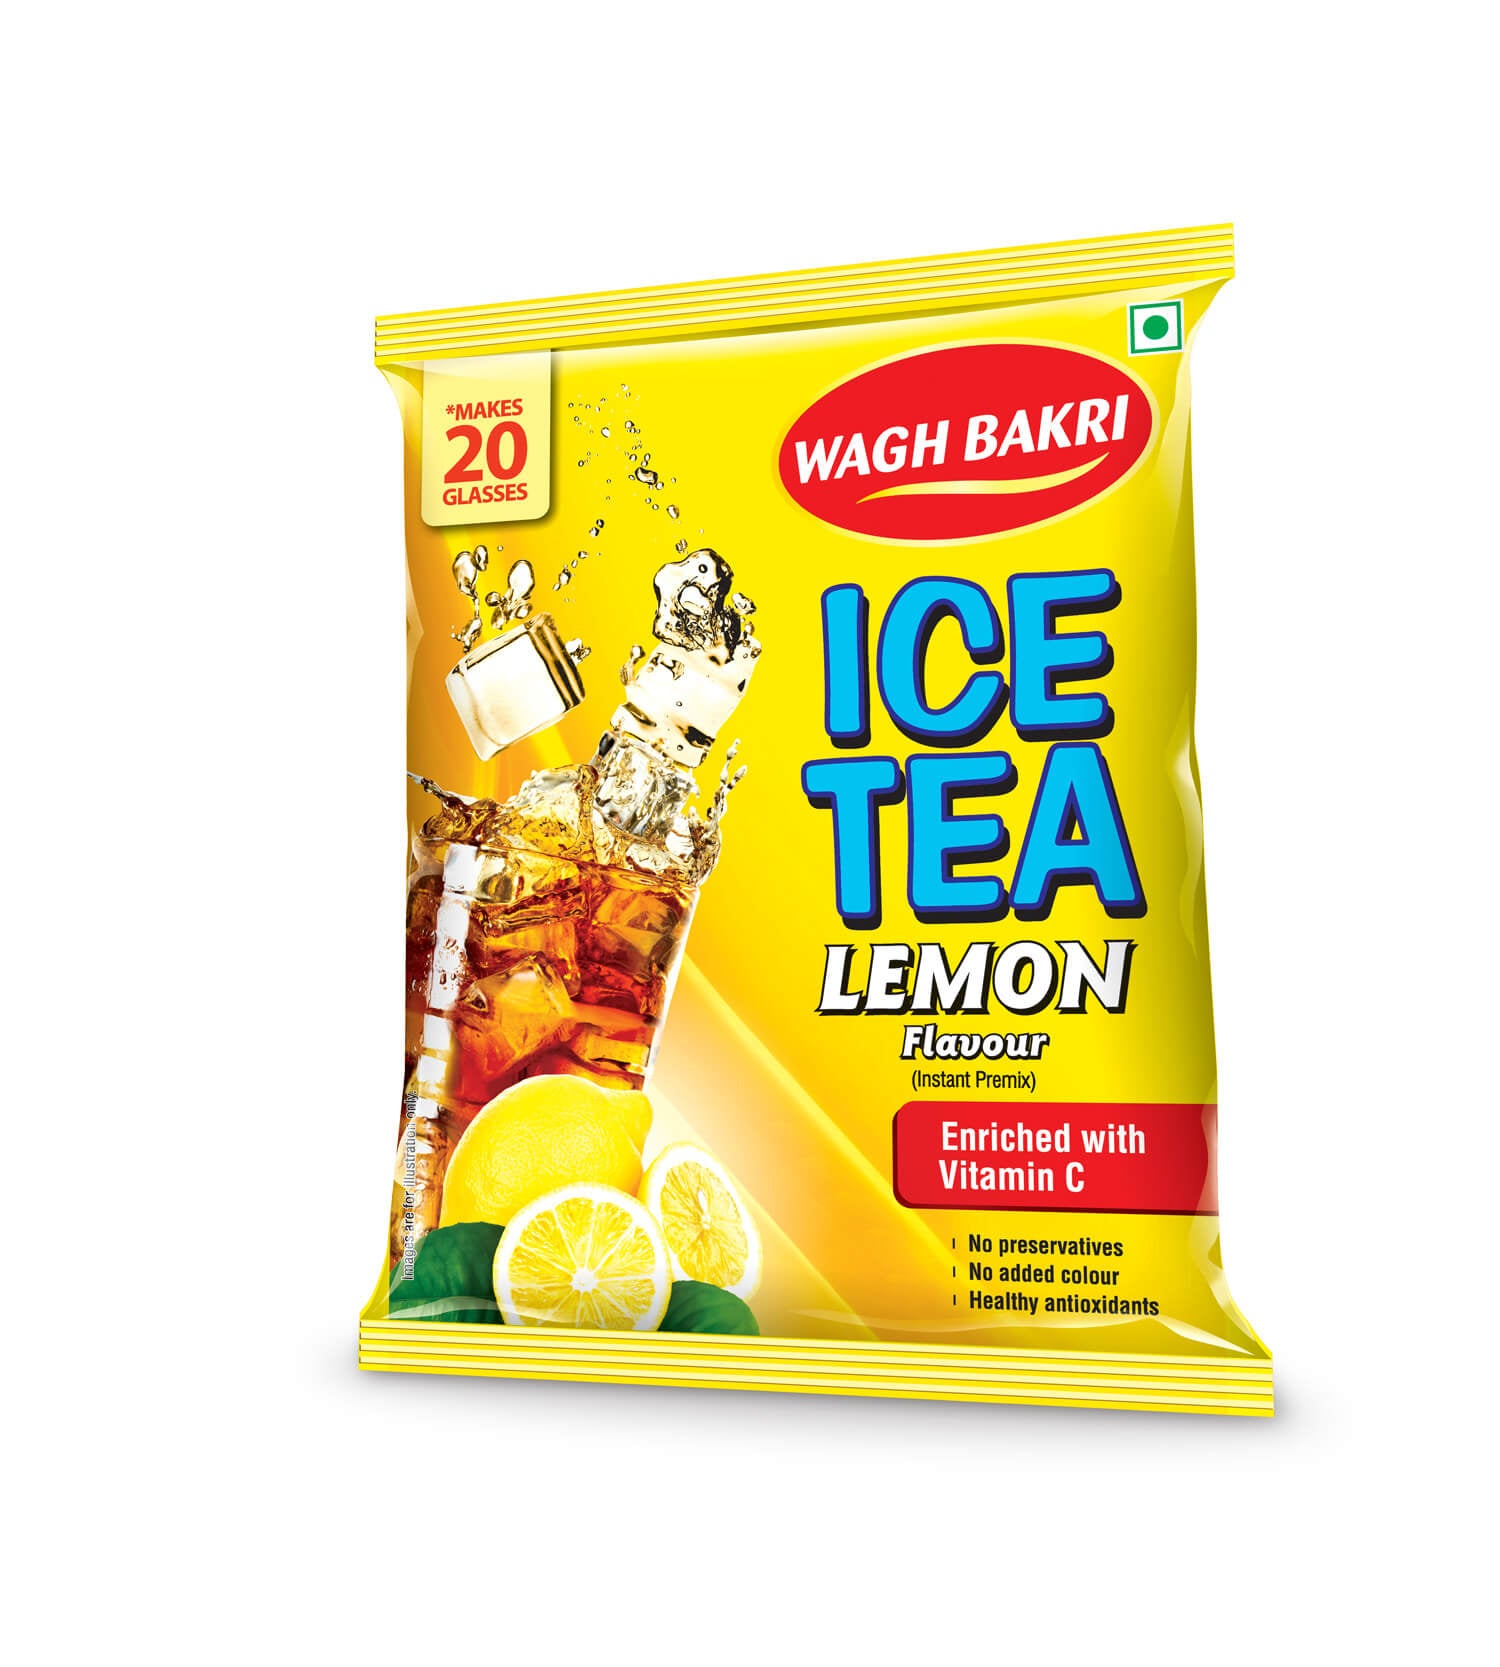 Wagh Bakri Ice Tea Combo - Lemon Pack of 1+1